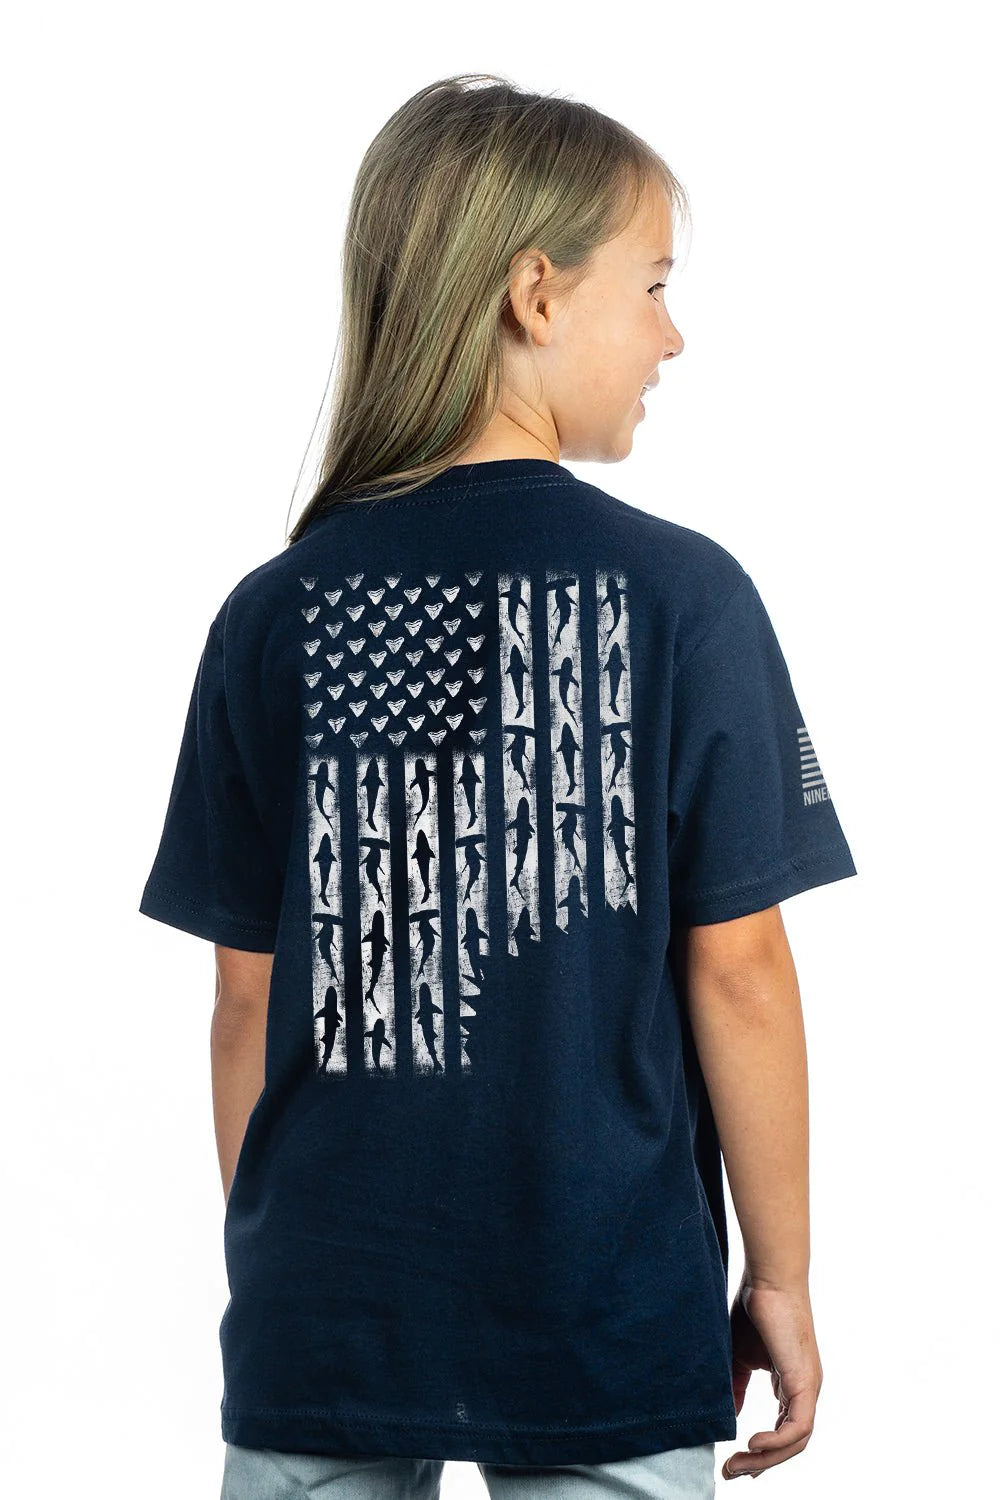 Youth Shark Flag T-Shirt- Midnight Navy